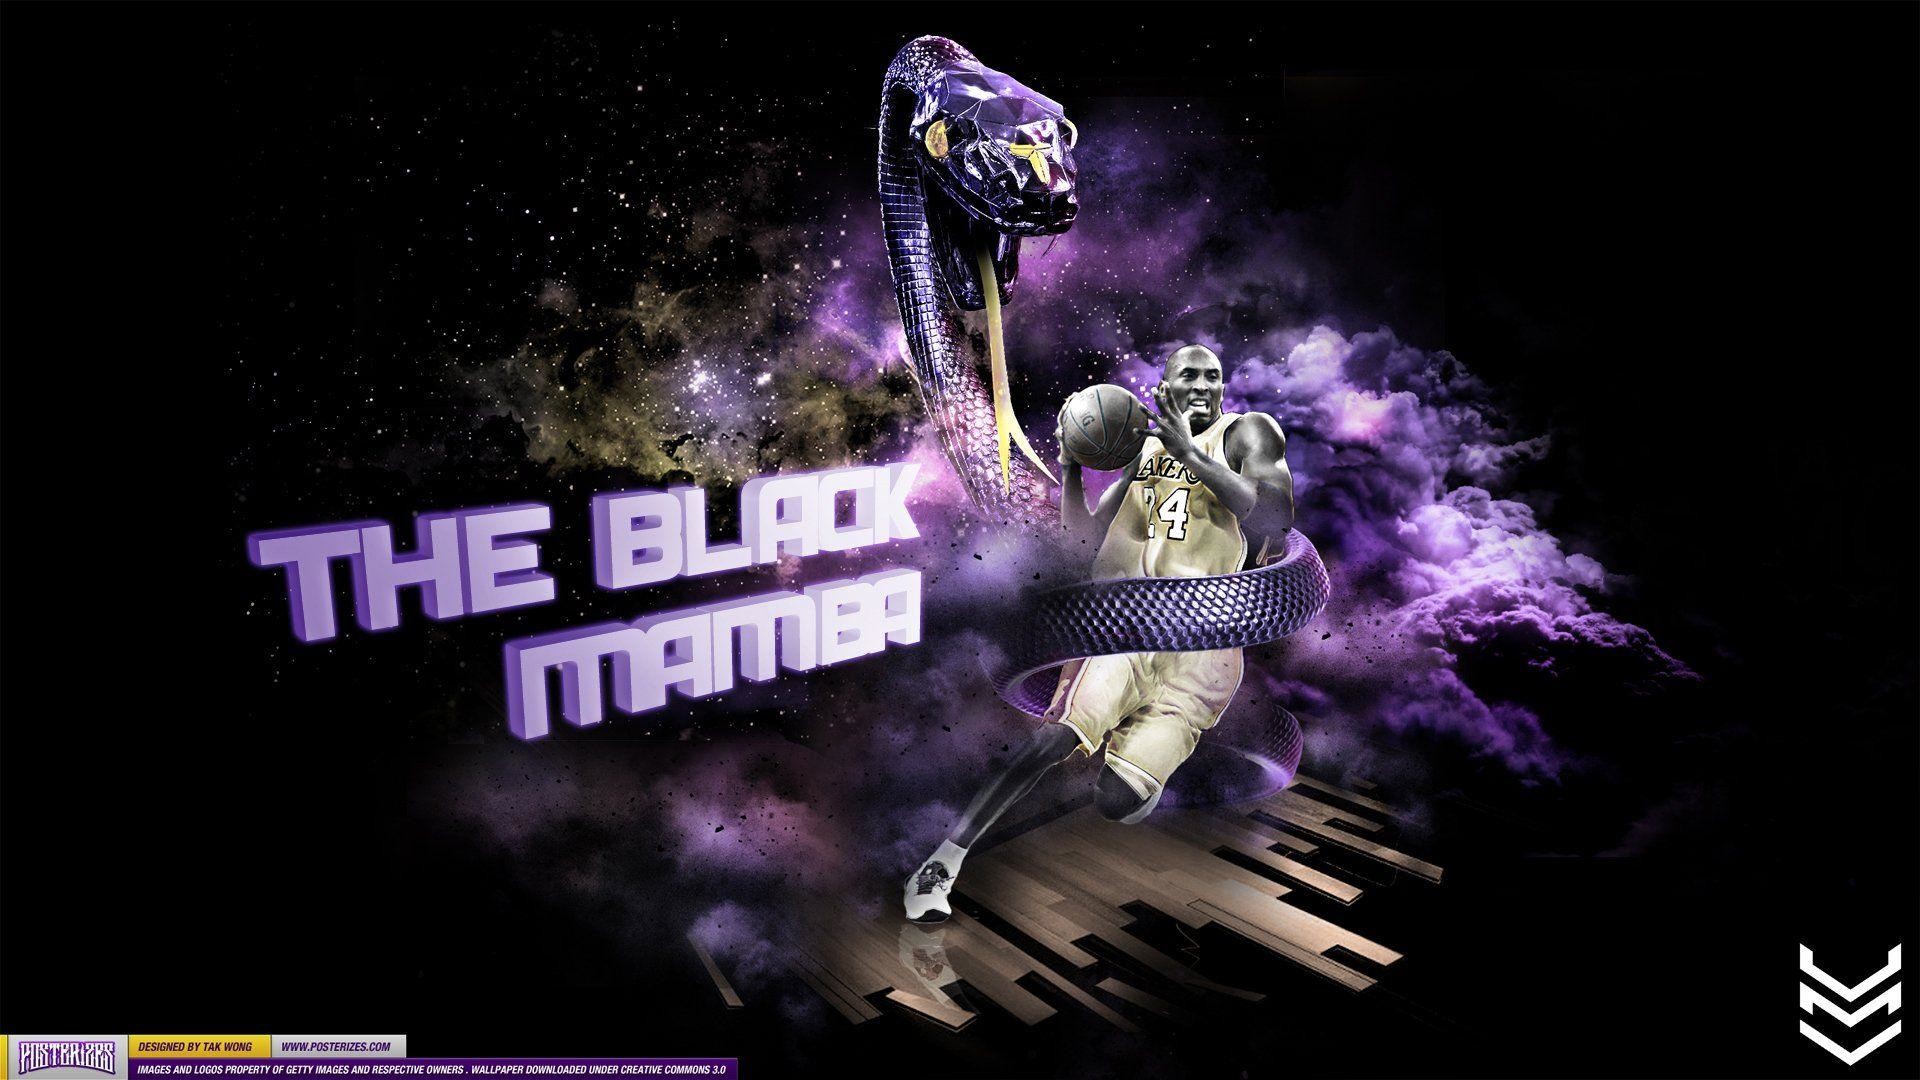 The Black Mamba  Kobe Bryant Desktop Wallpaper 1024 x 768  JM  Flickr